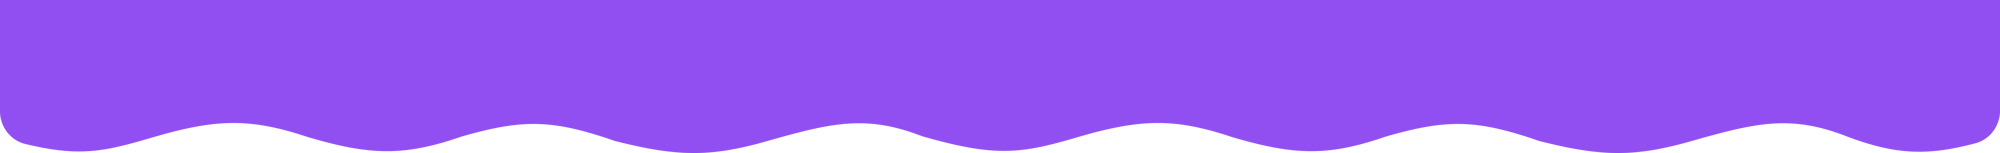 BG_Purple_Bottom